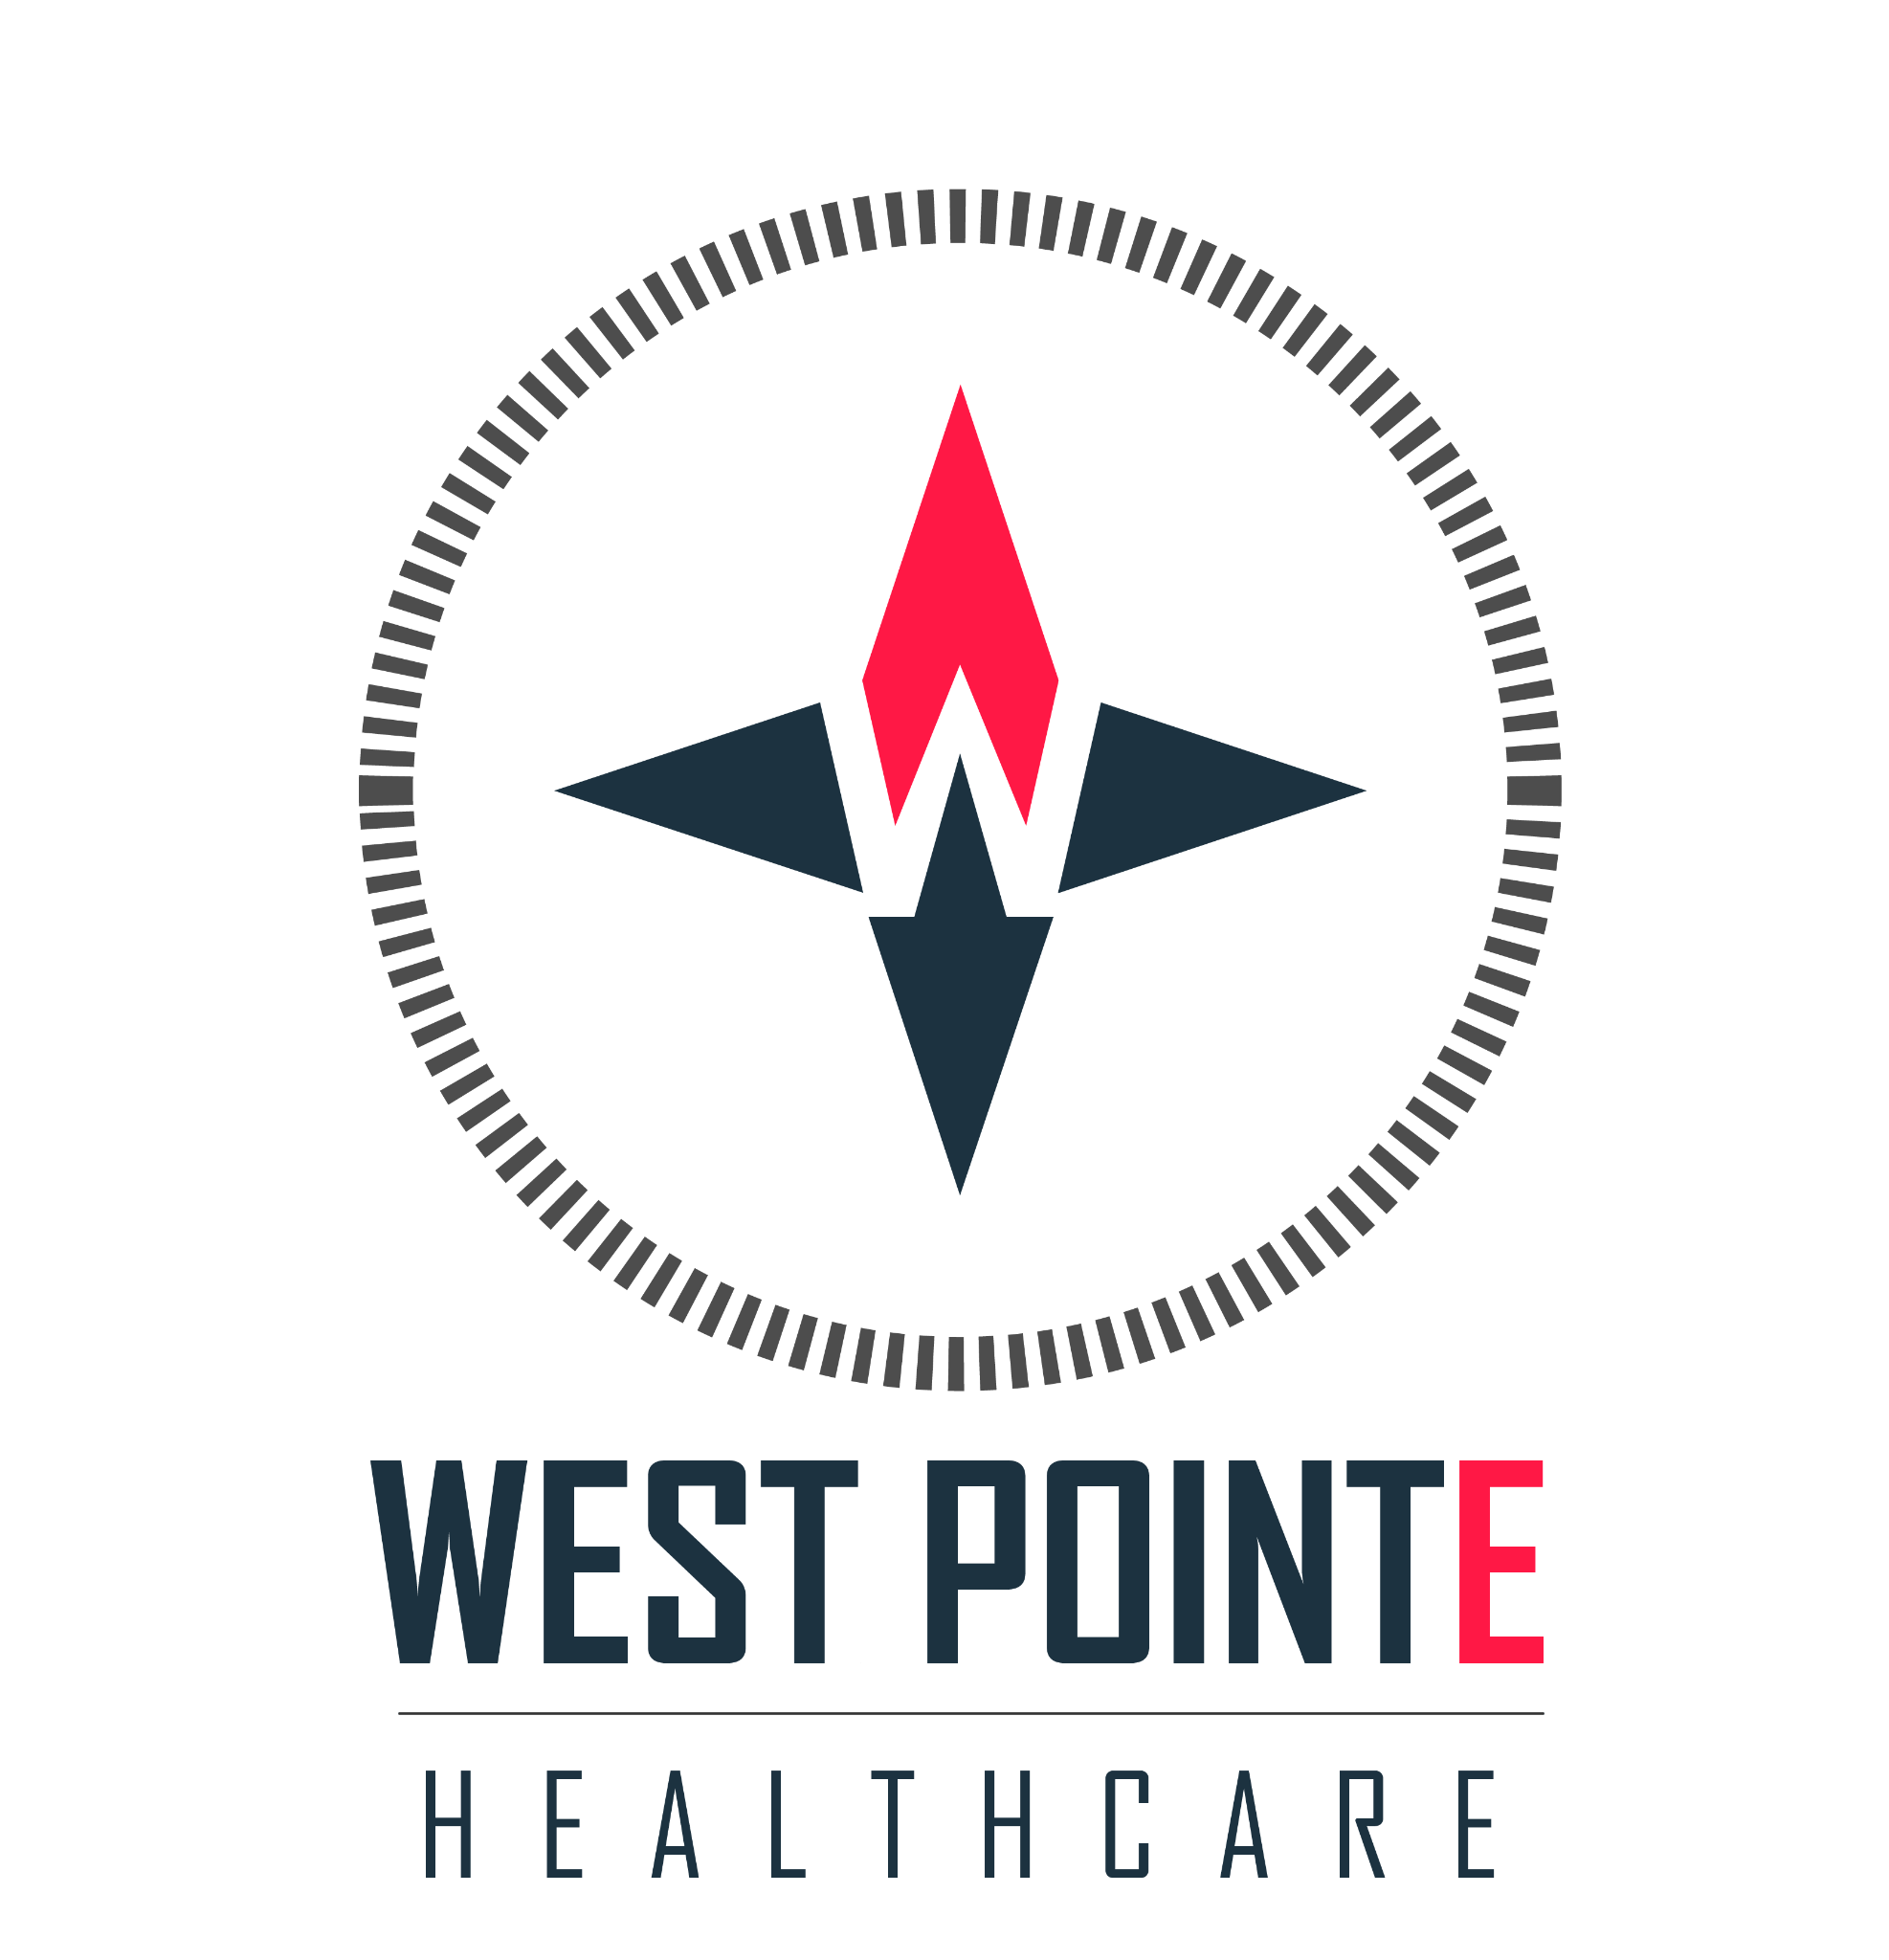 West Pointe Healthcare